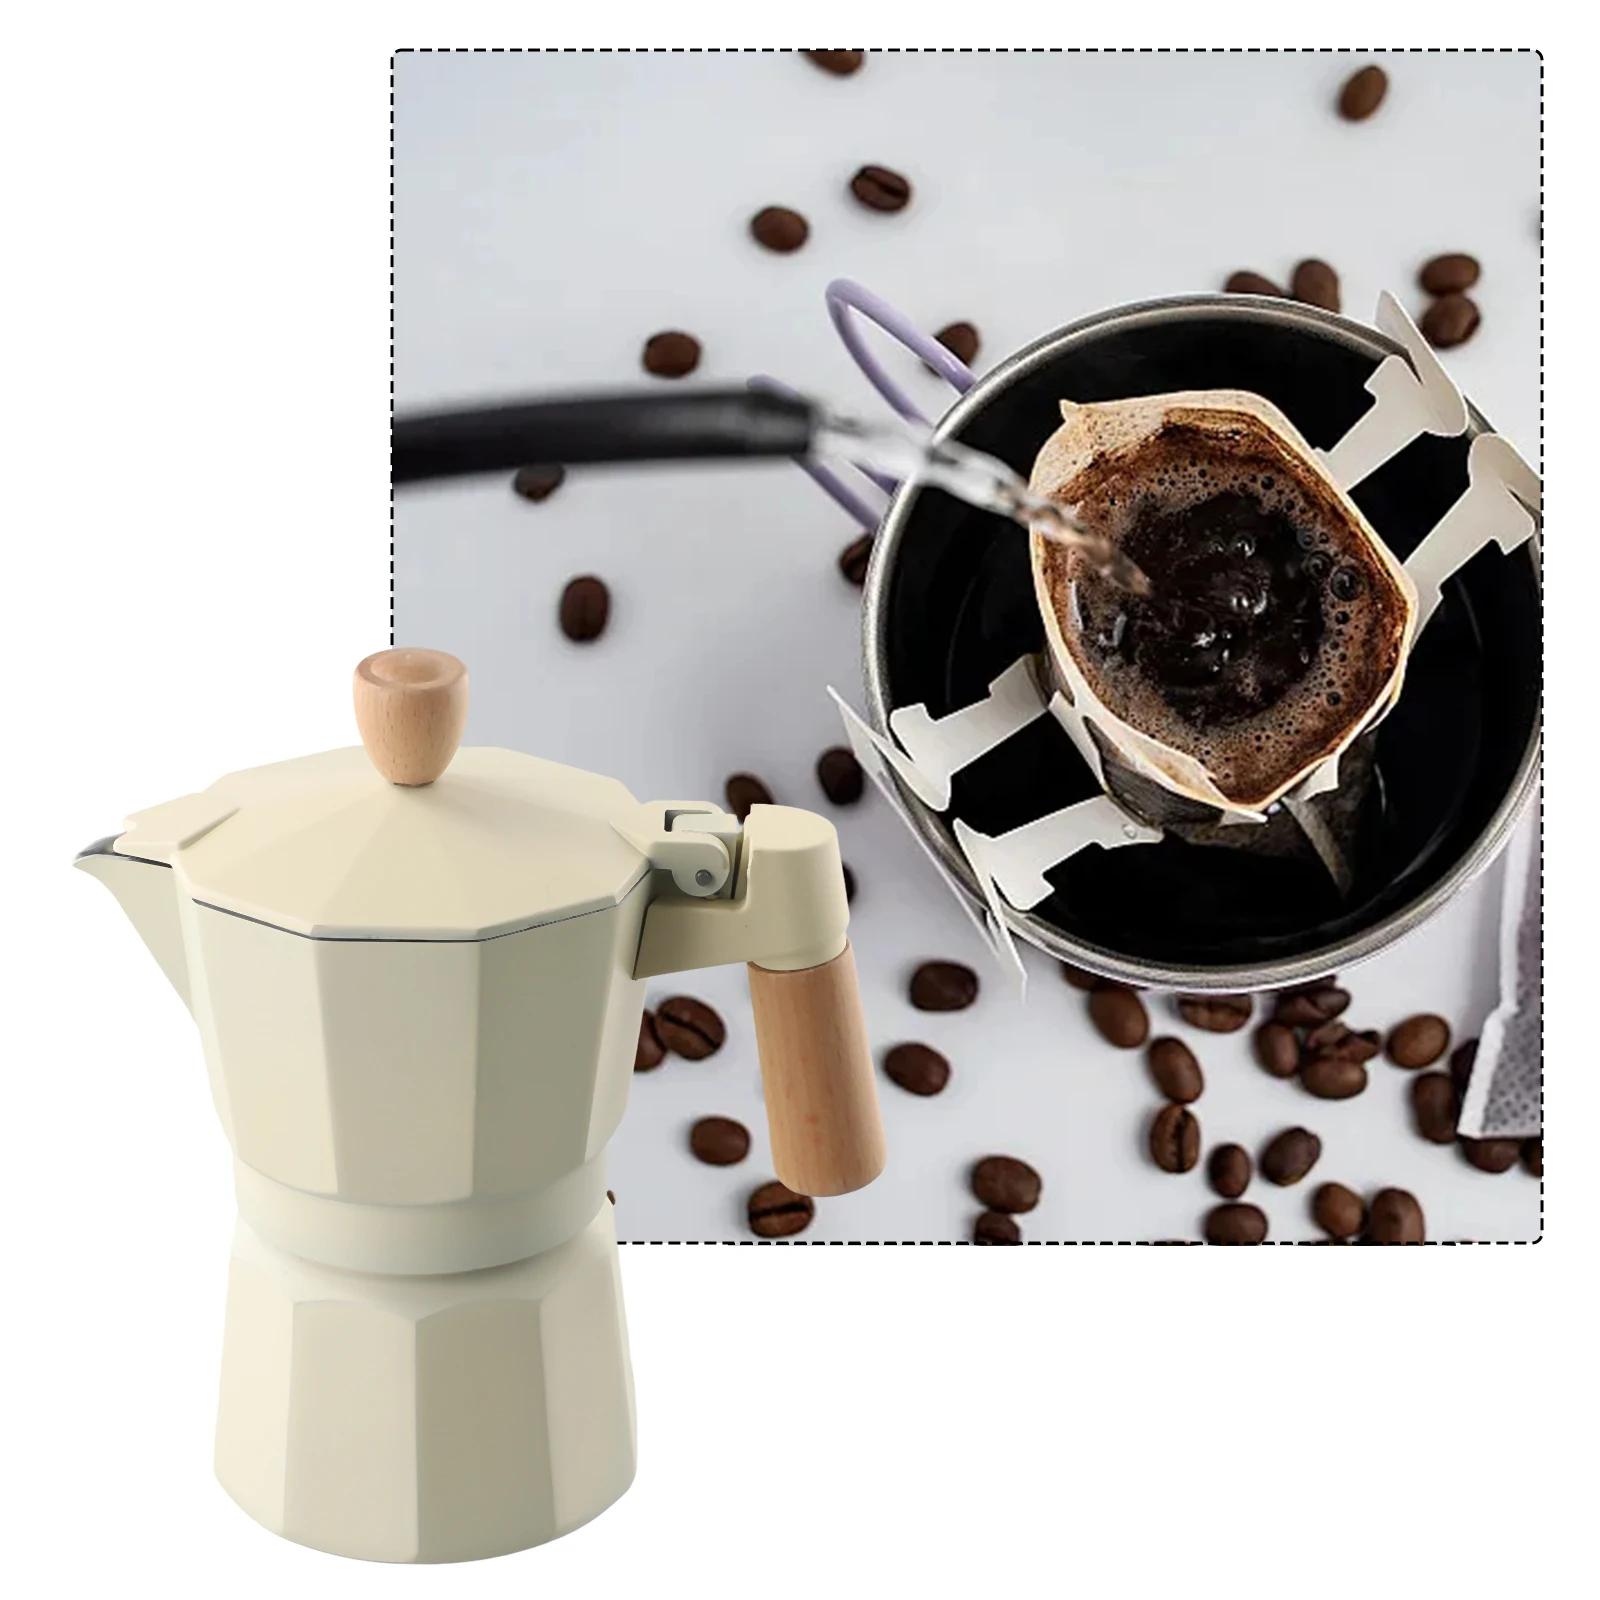 6-CUP BIALETTI COFFEE MAKER  Zara Home United States of America